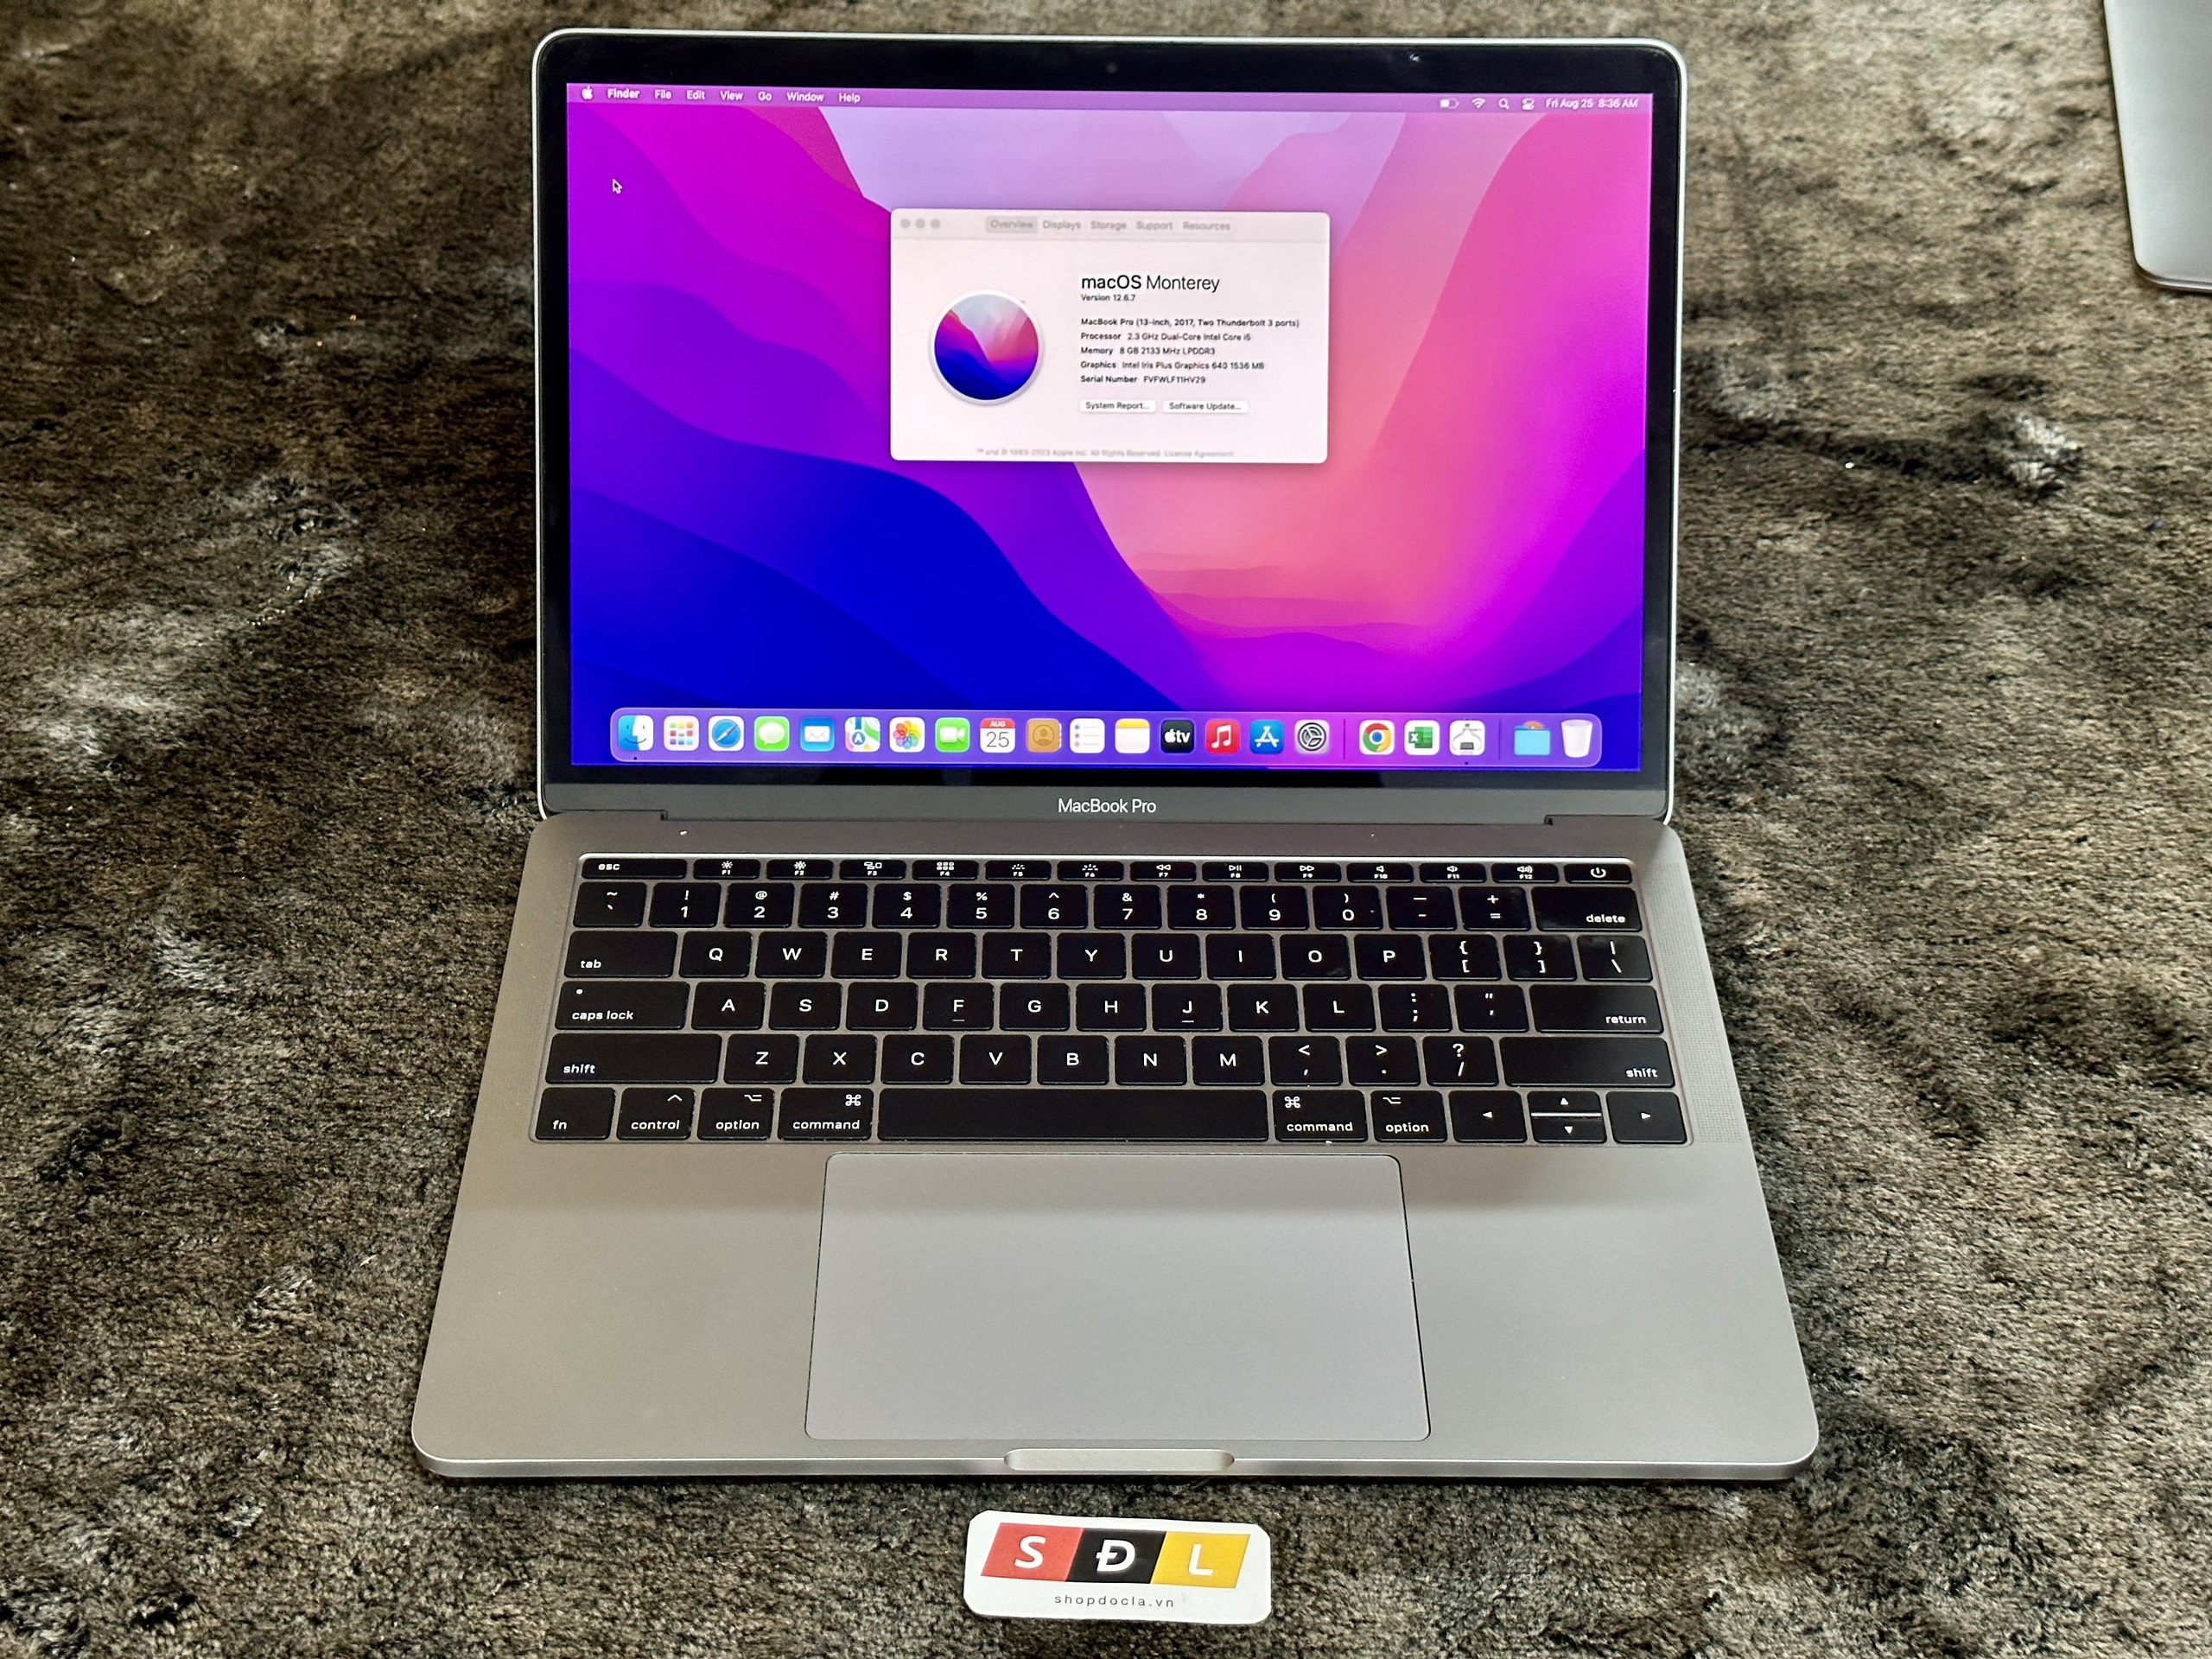 MacBook Pro (13-inch, 2017, Two Thunderbolt 3 ports) i5 8GB 256GB model MPXT2